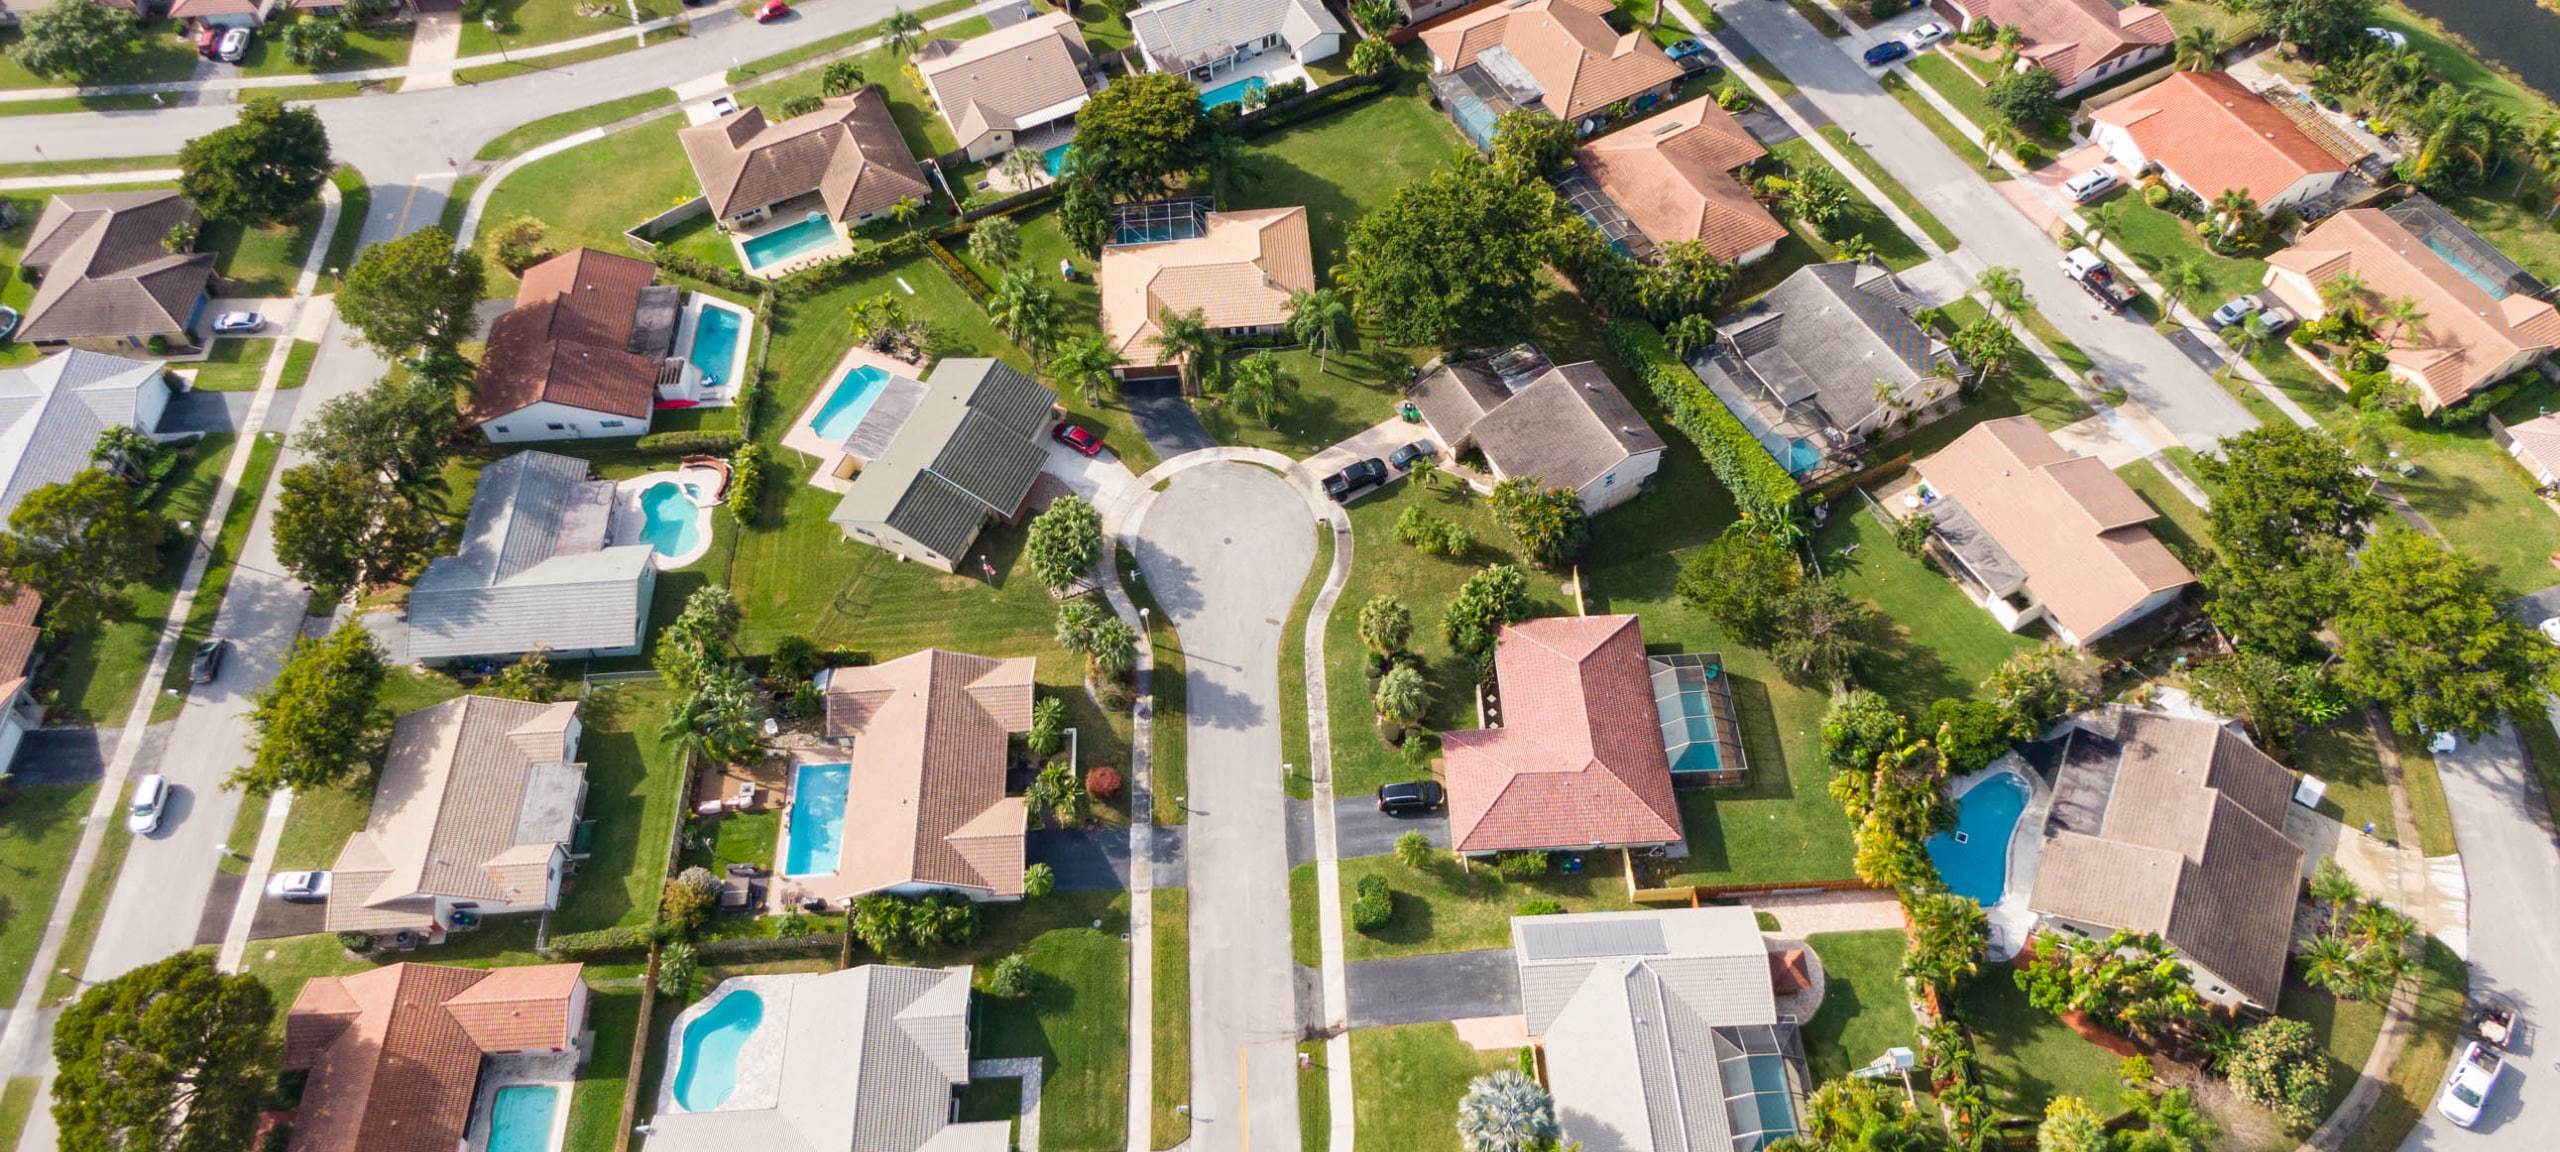 Aerial view of neighborhood typical of Horizon West, FL